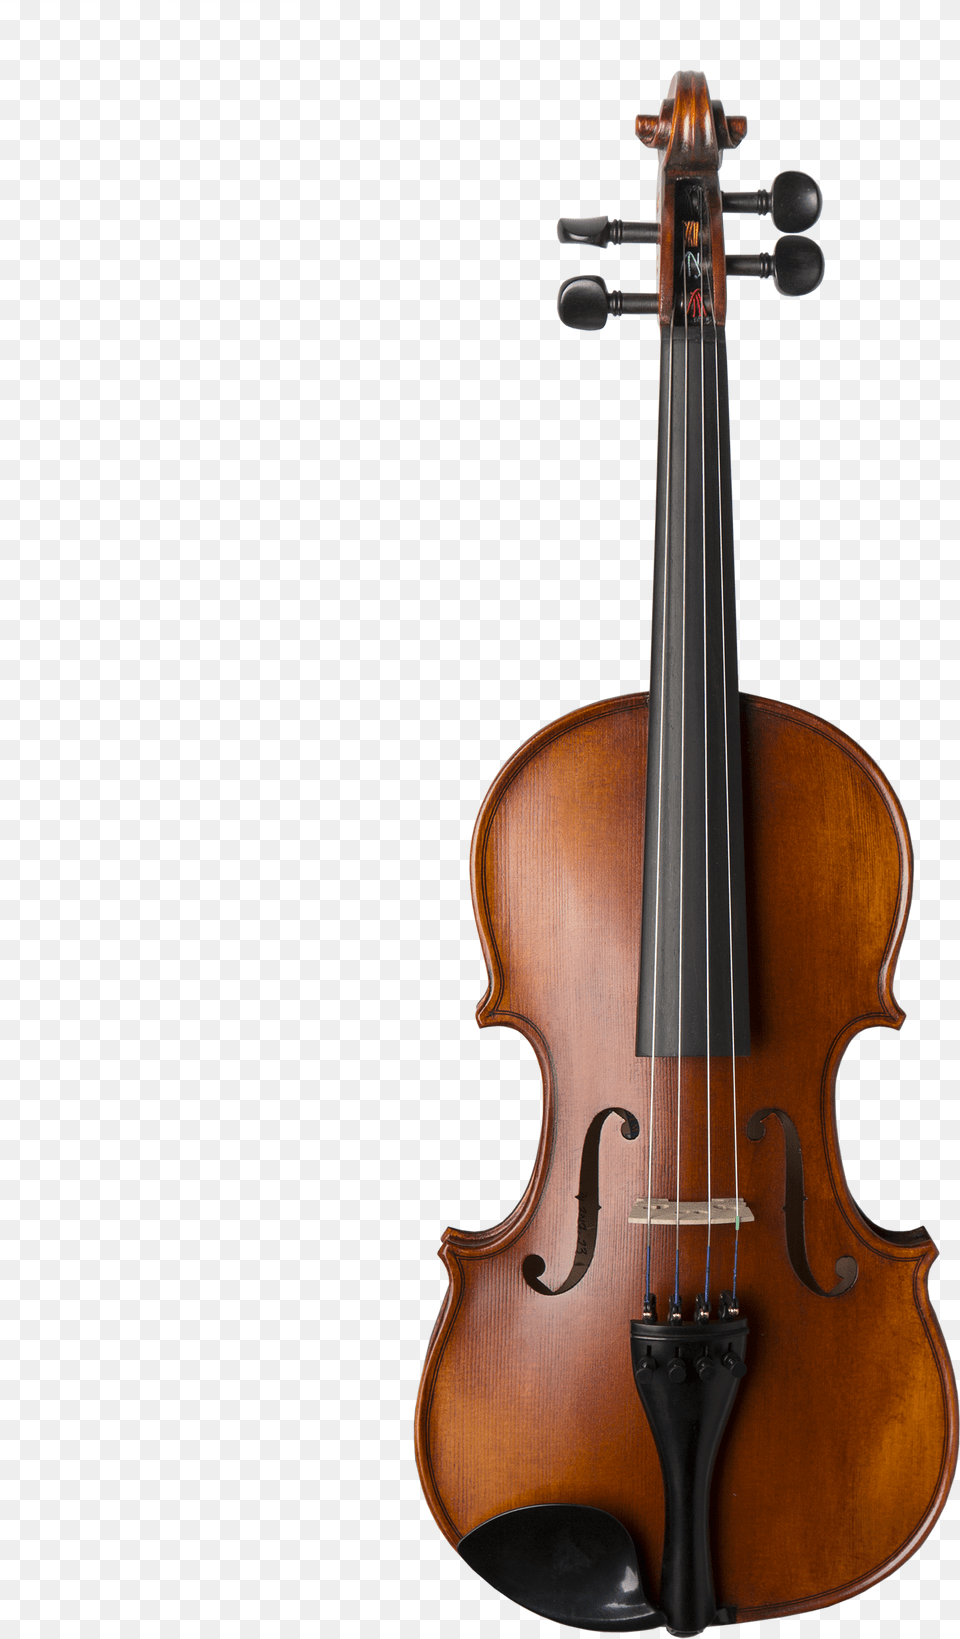 Glasser Composite Aex 5 String Violin, Musical Instrument Free Png Download